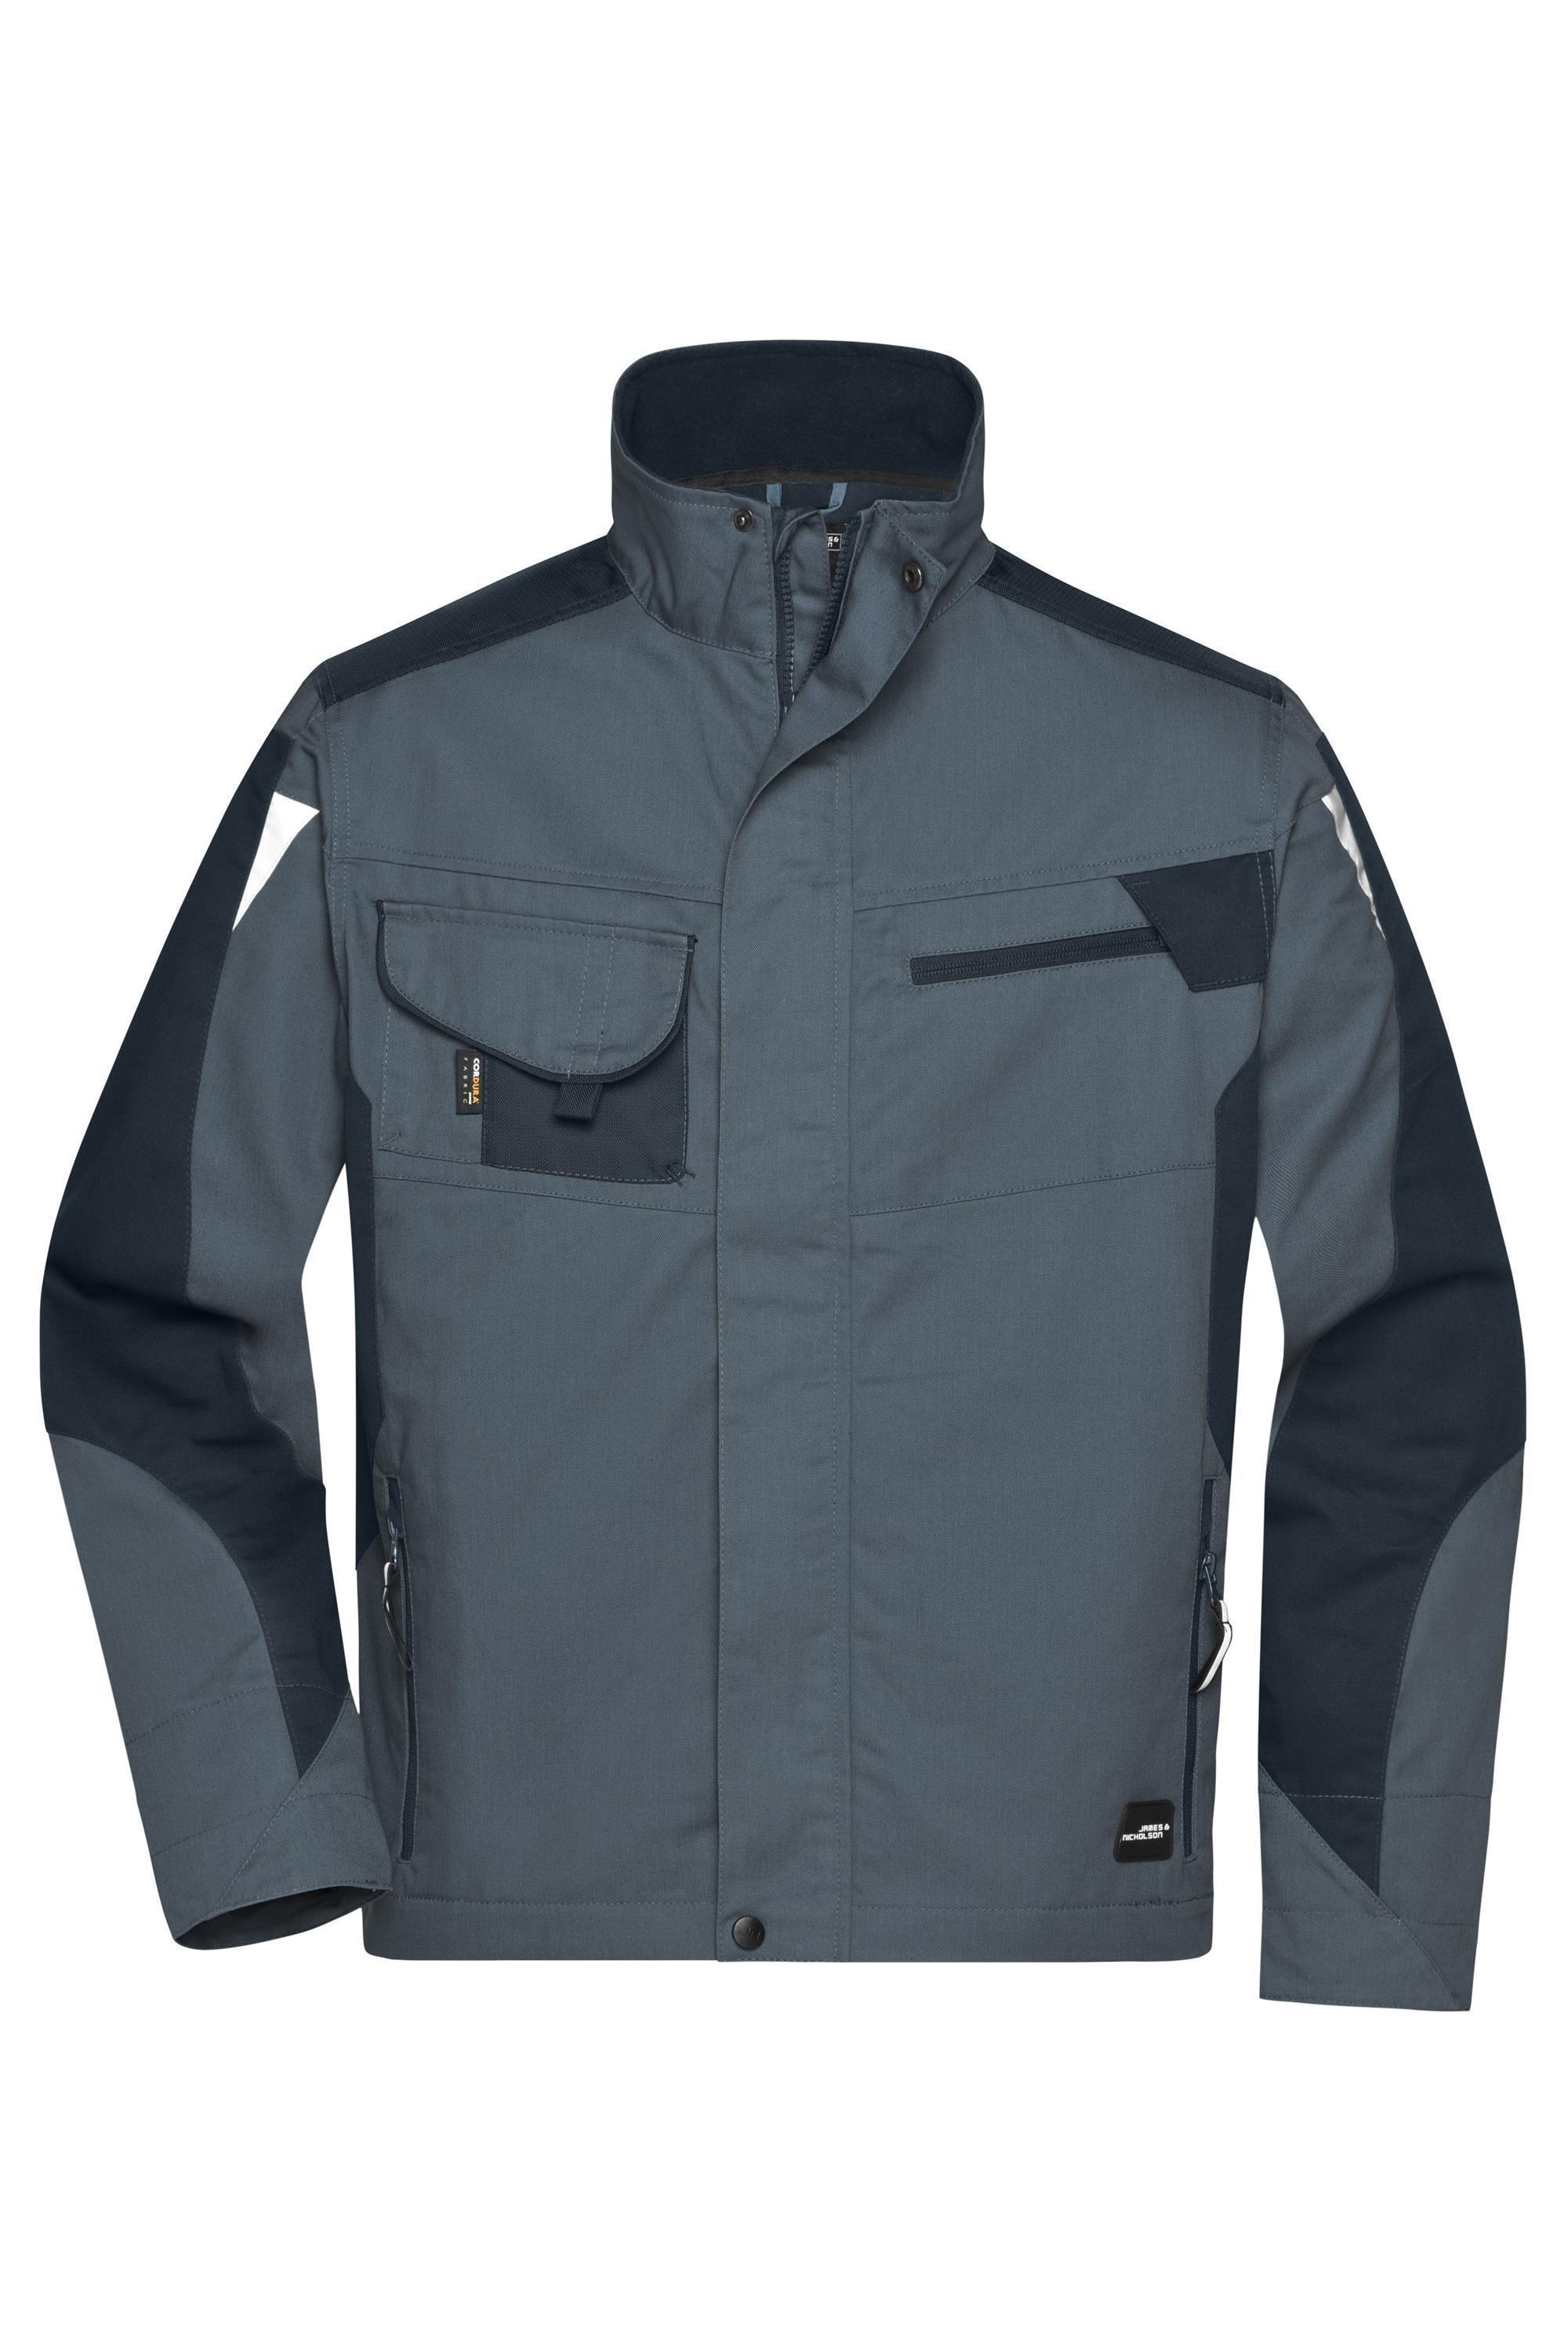 Unisex Workwear Jacke Strong James & Nicholson® Carbon / Black S